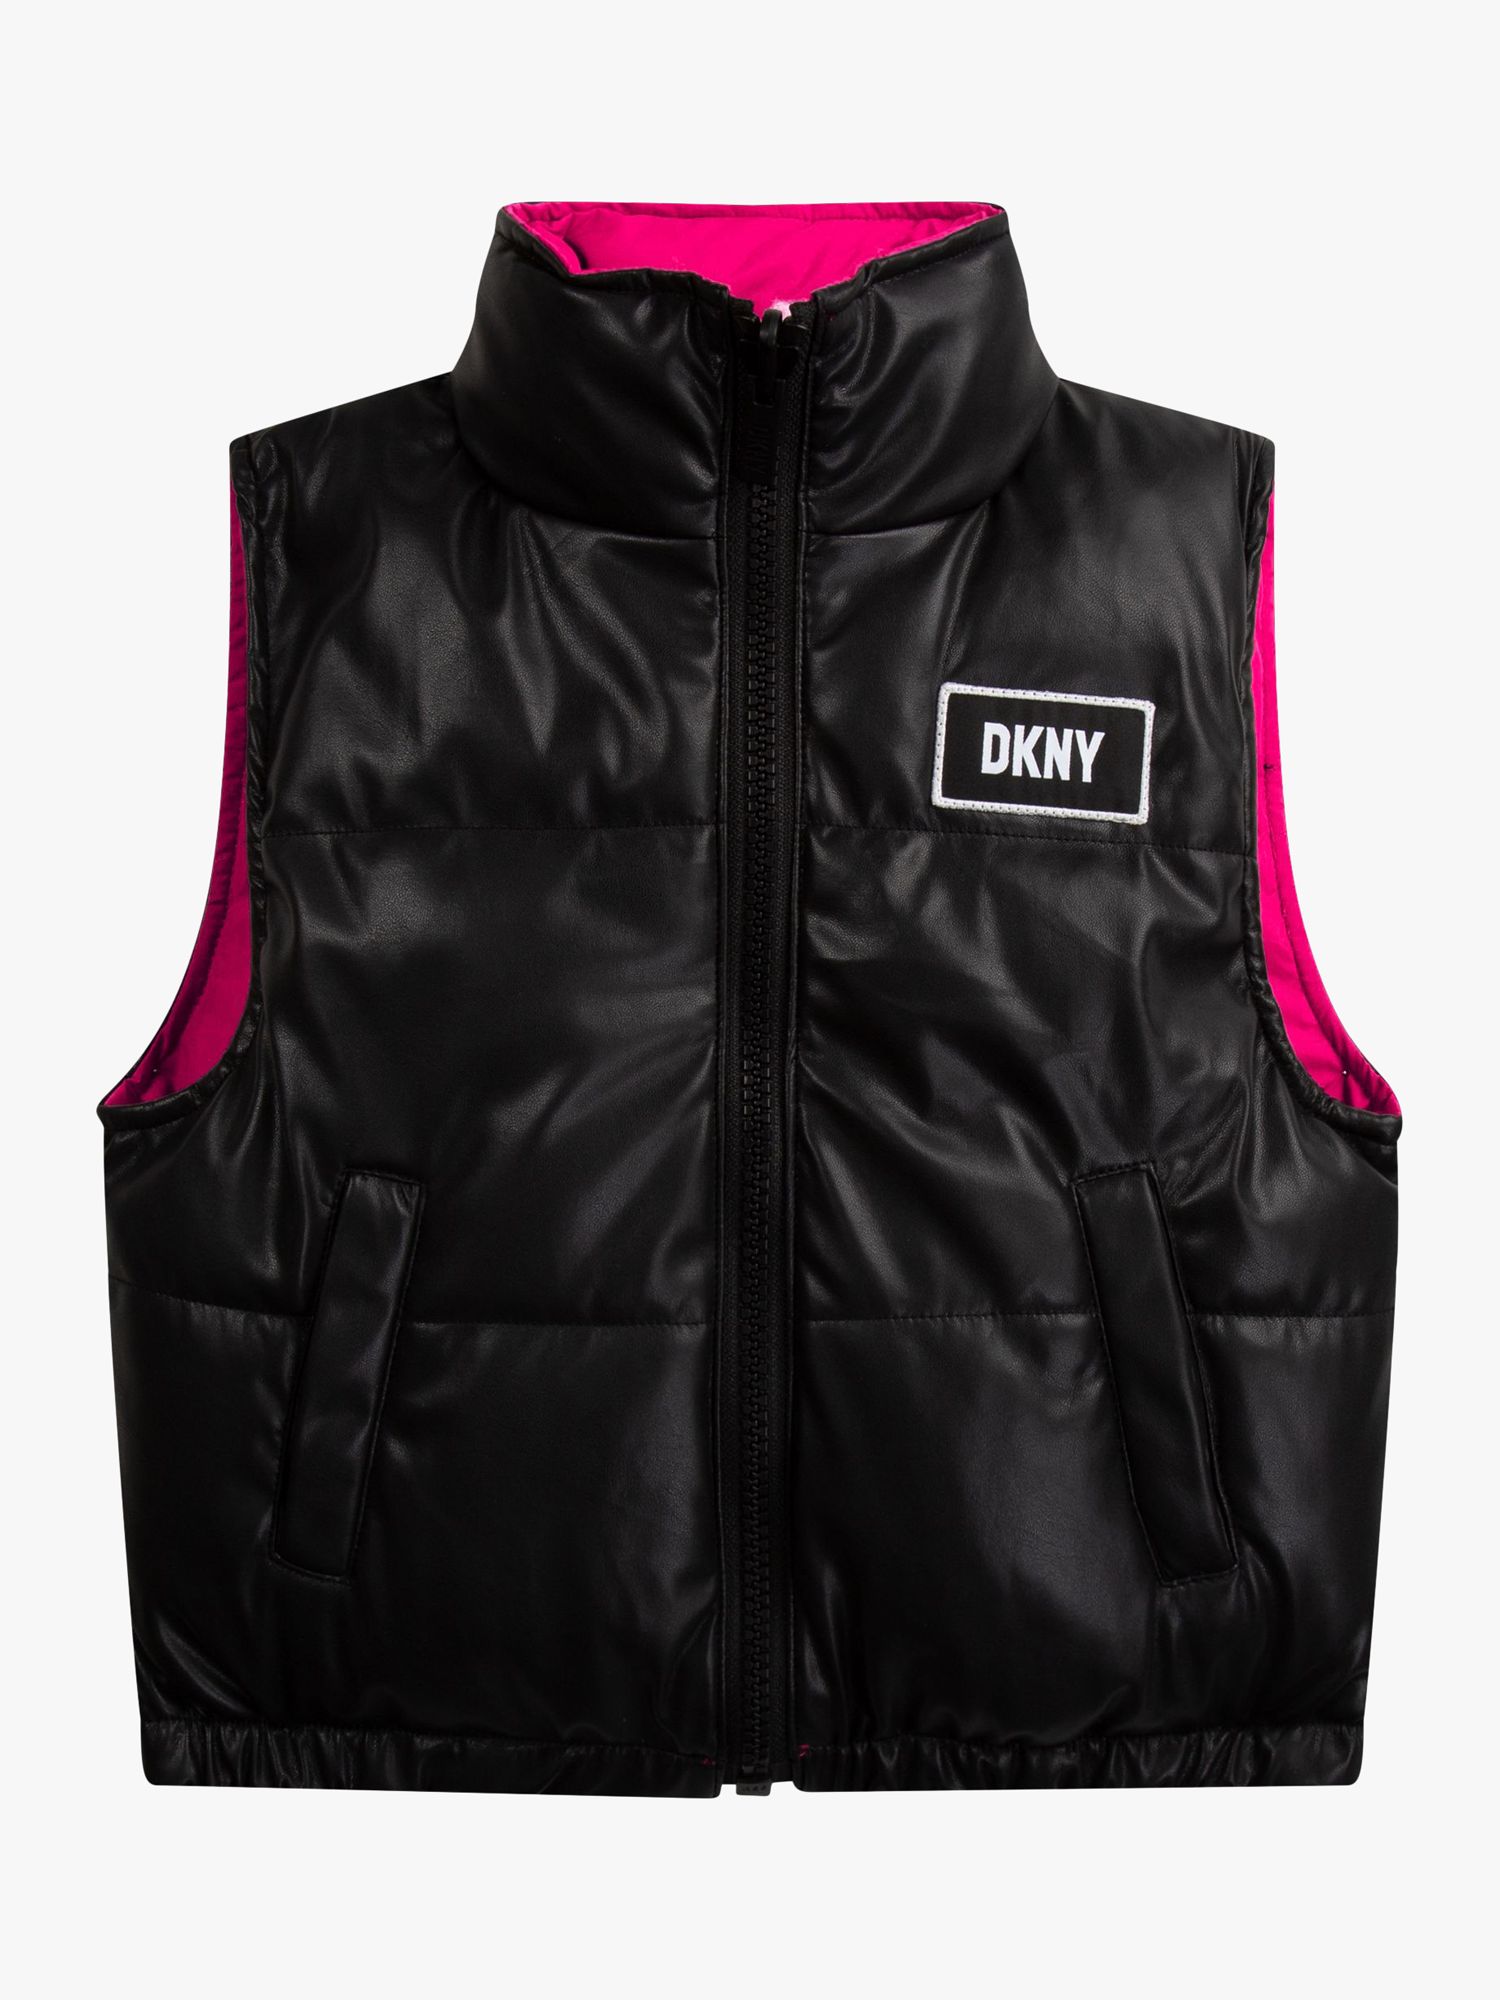 DKNY Kids' Reversible Puffer Gilet, Black/Pink, 4 years